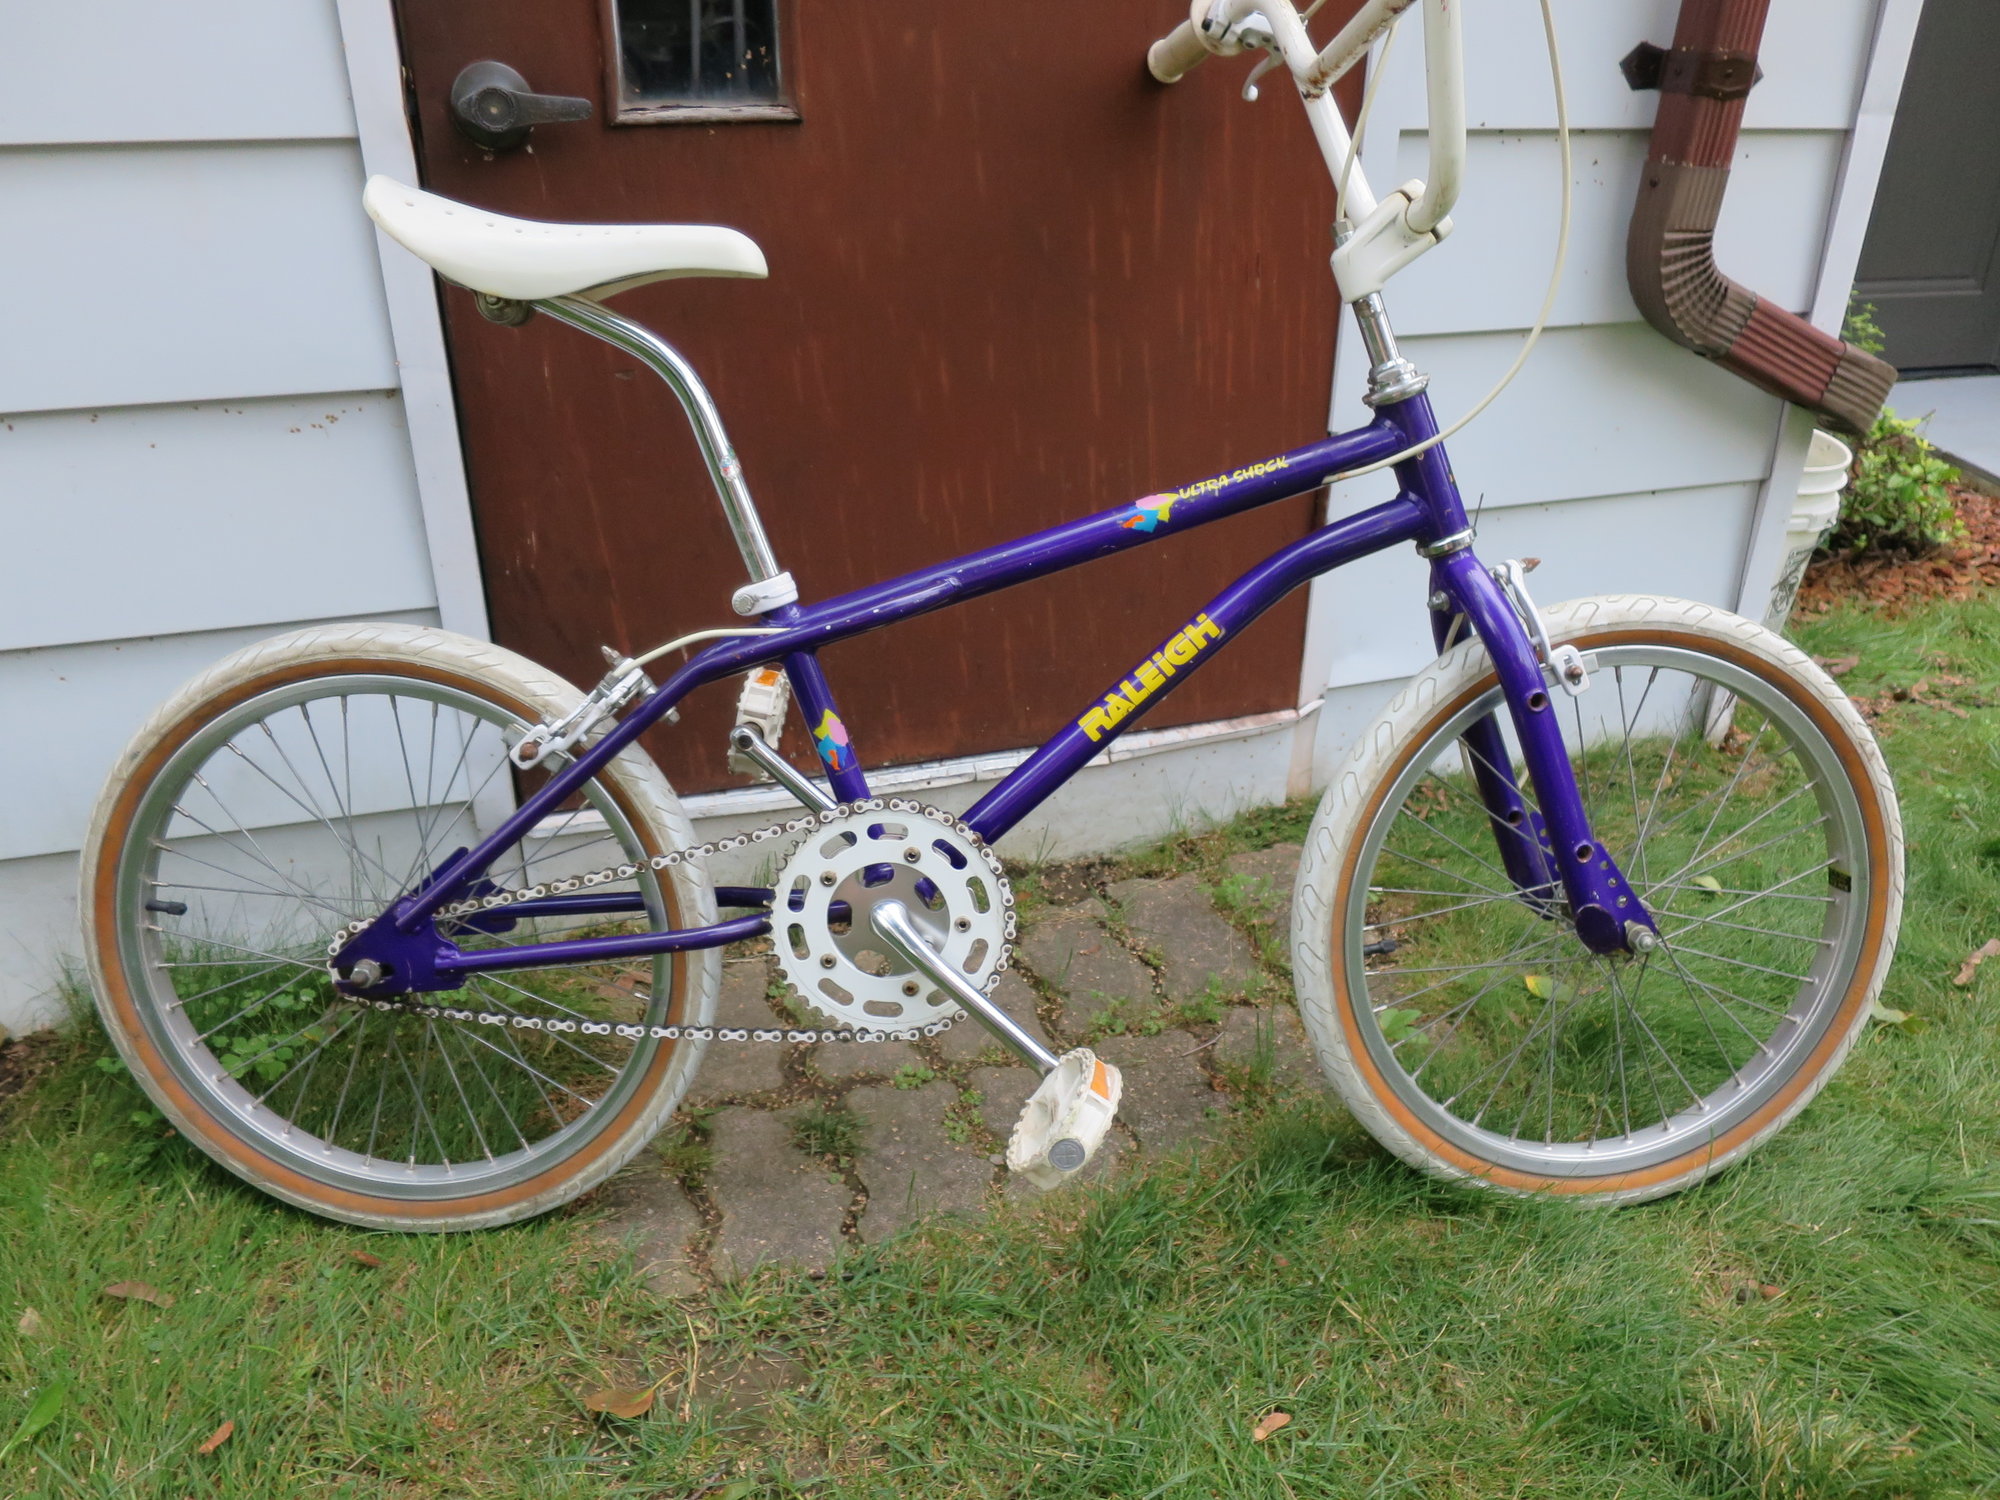 old raleigh bmx bikes